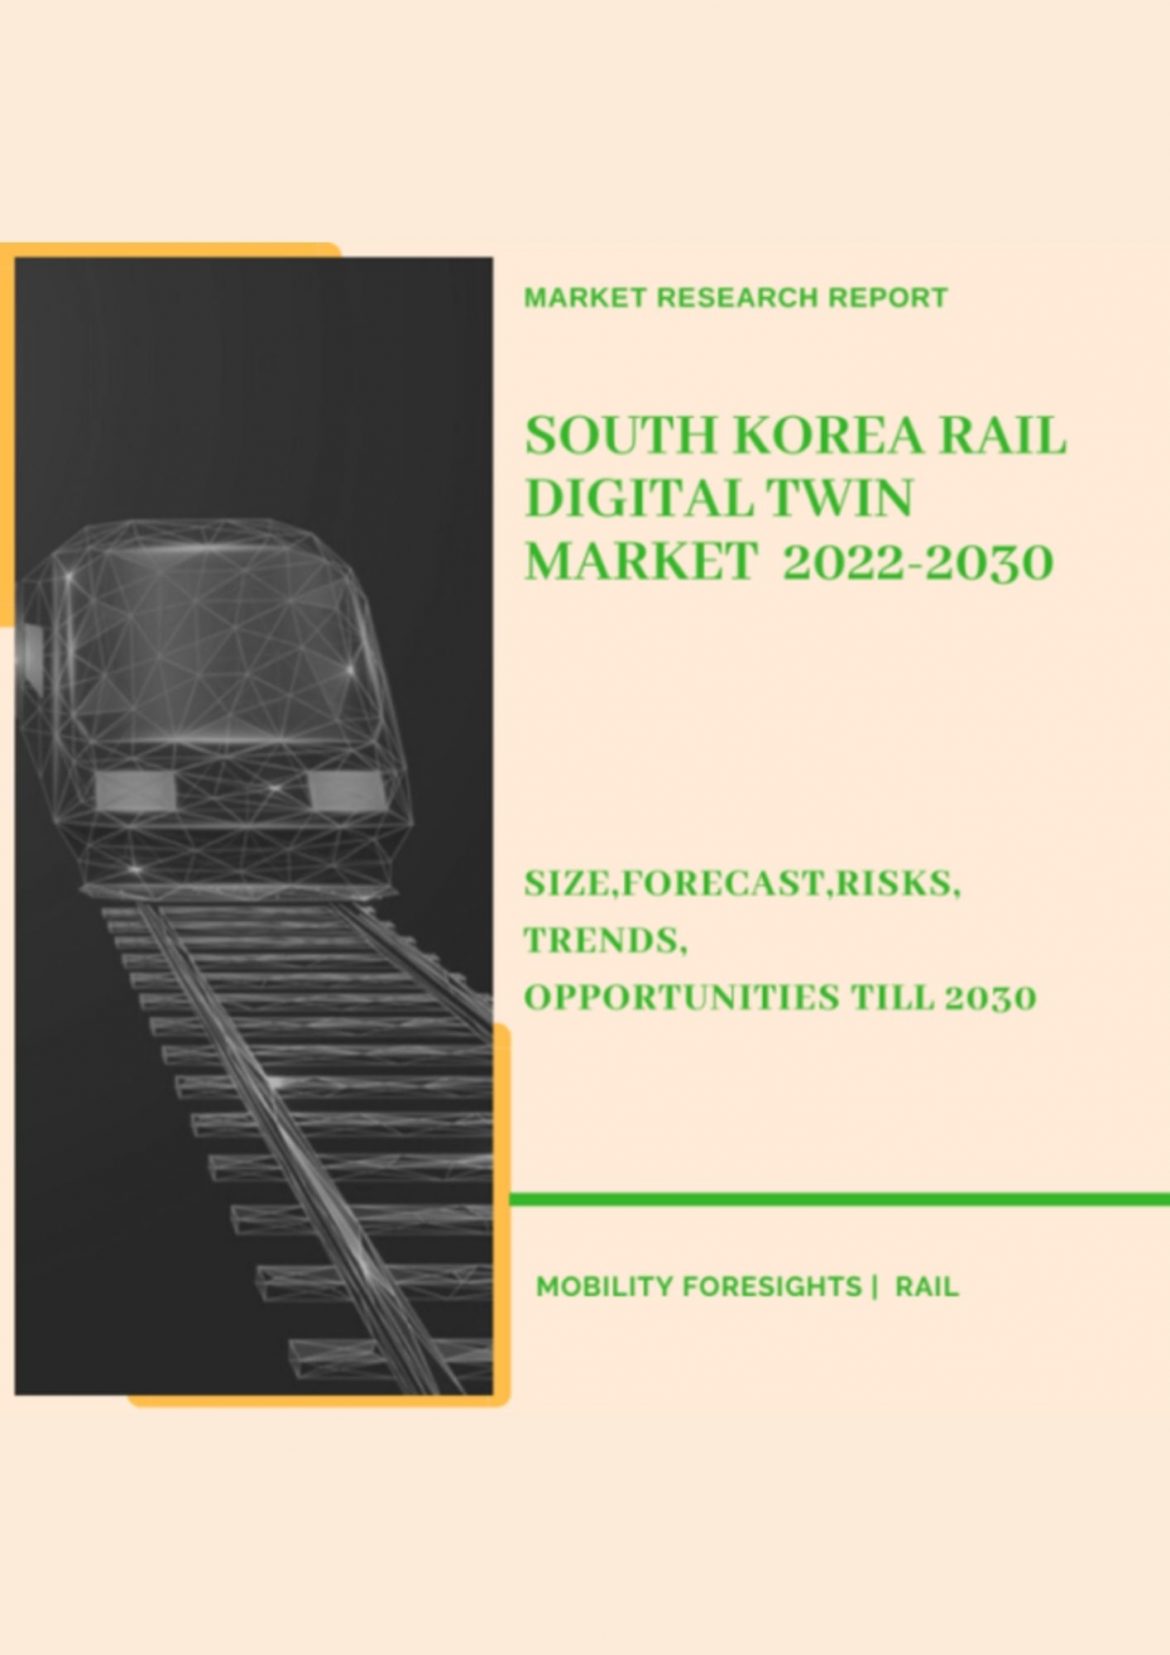 South Korea Rail Digital Twin Market 2022-2030